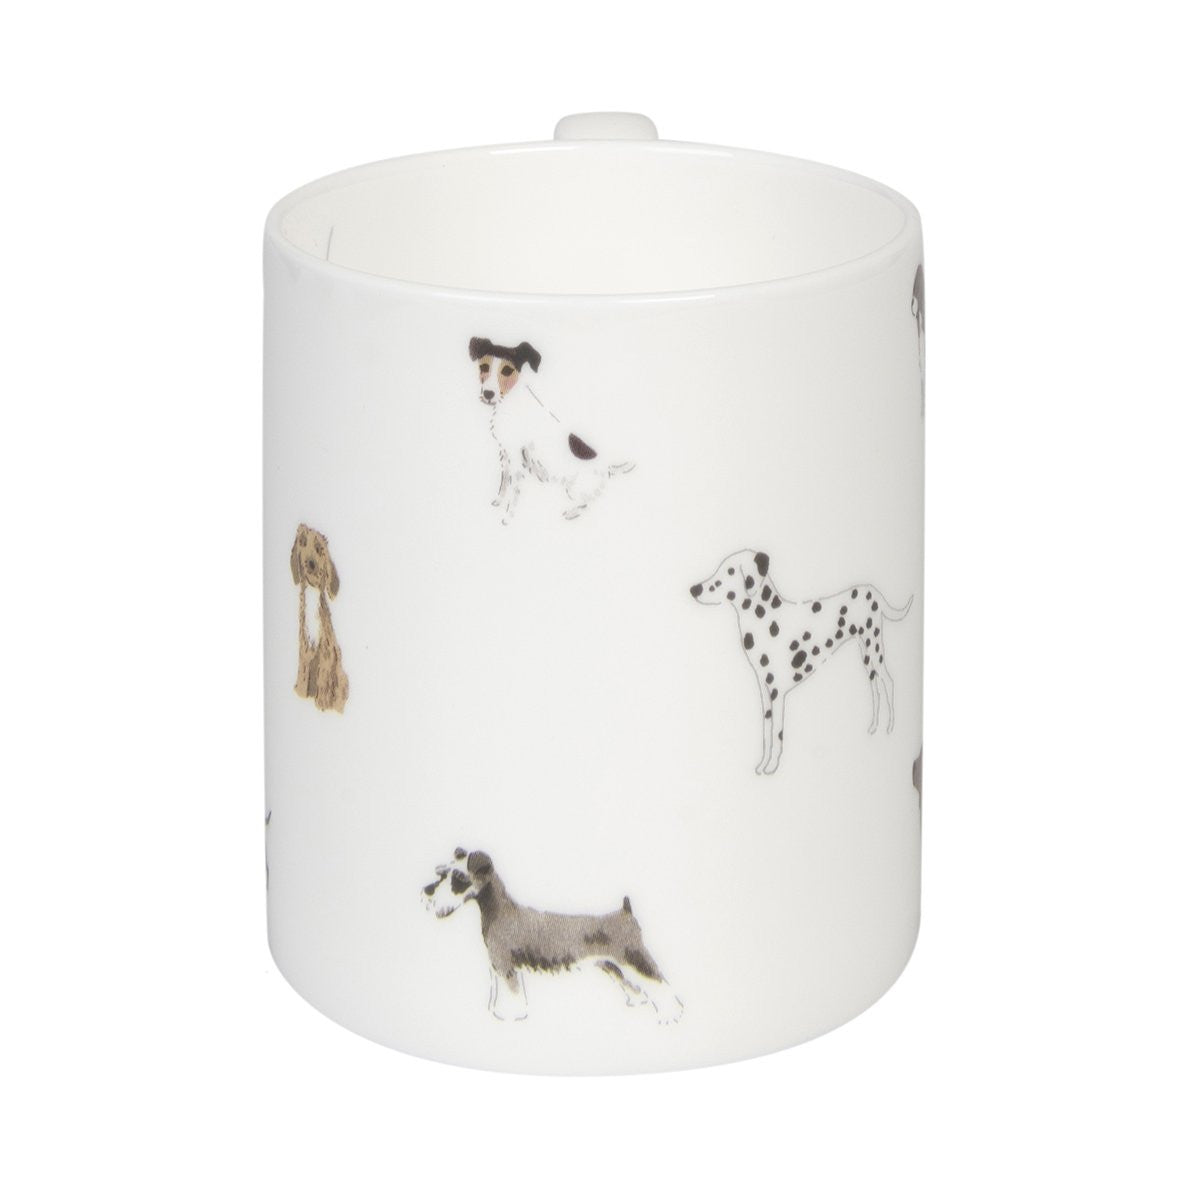 Sophie Allport bone china Fetch Dog mug.